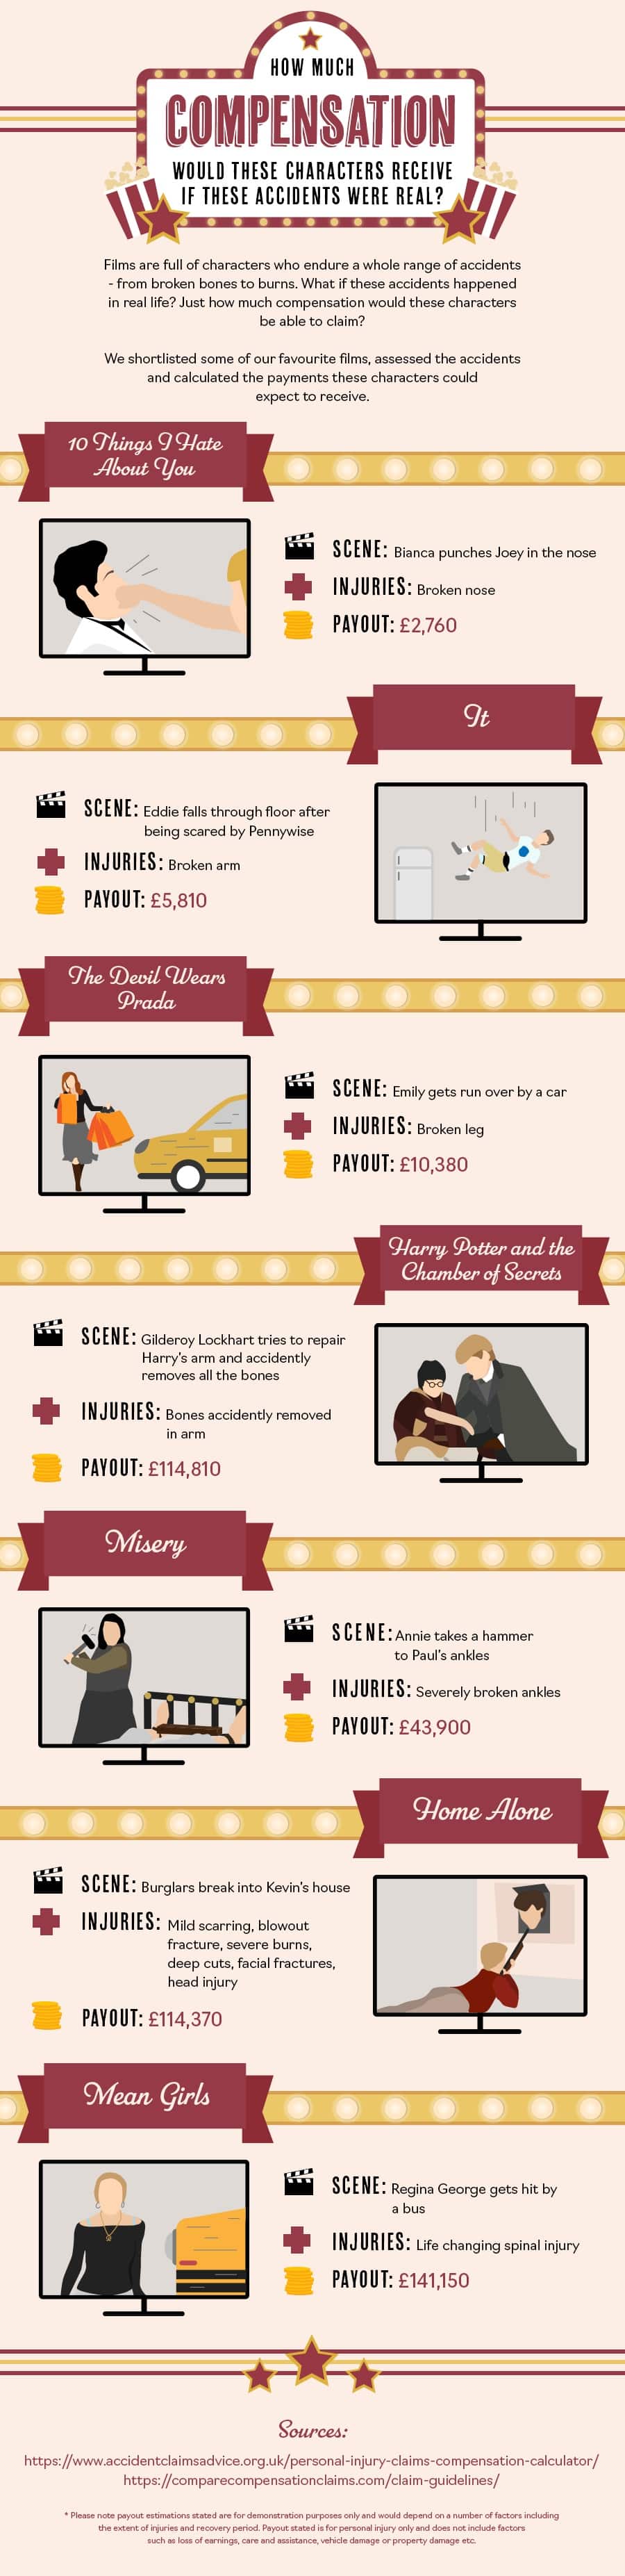 Compare-Compensation-Claims-infographic-movie-compensation_